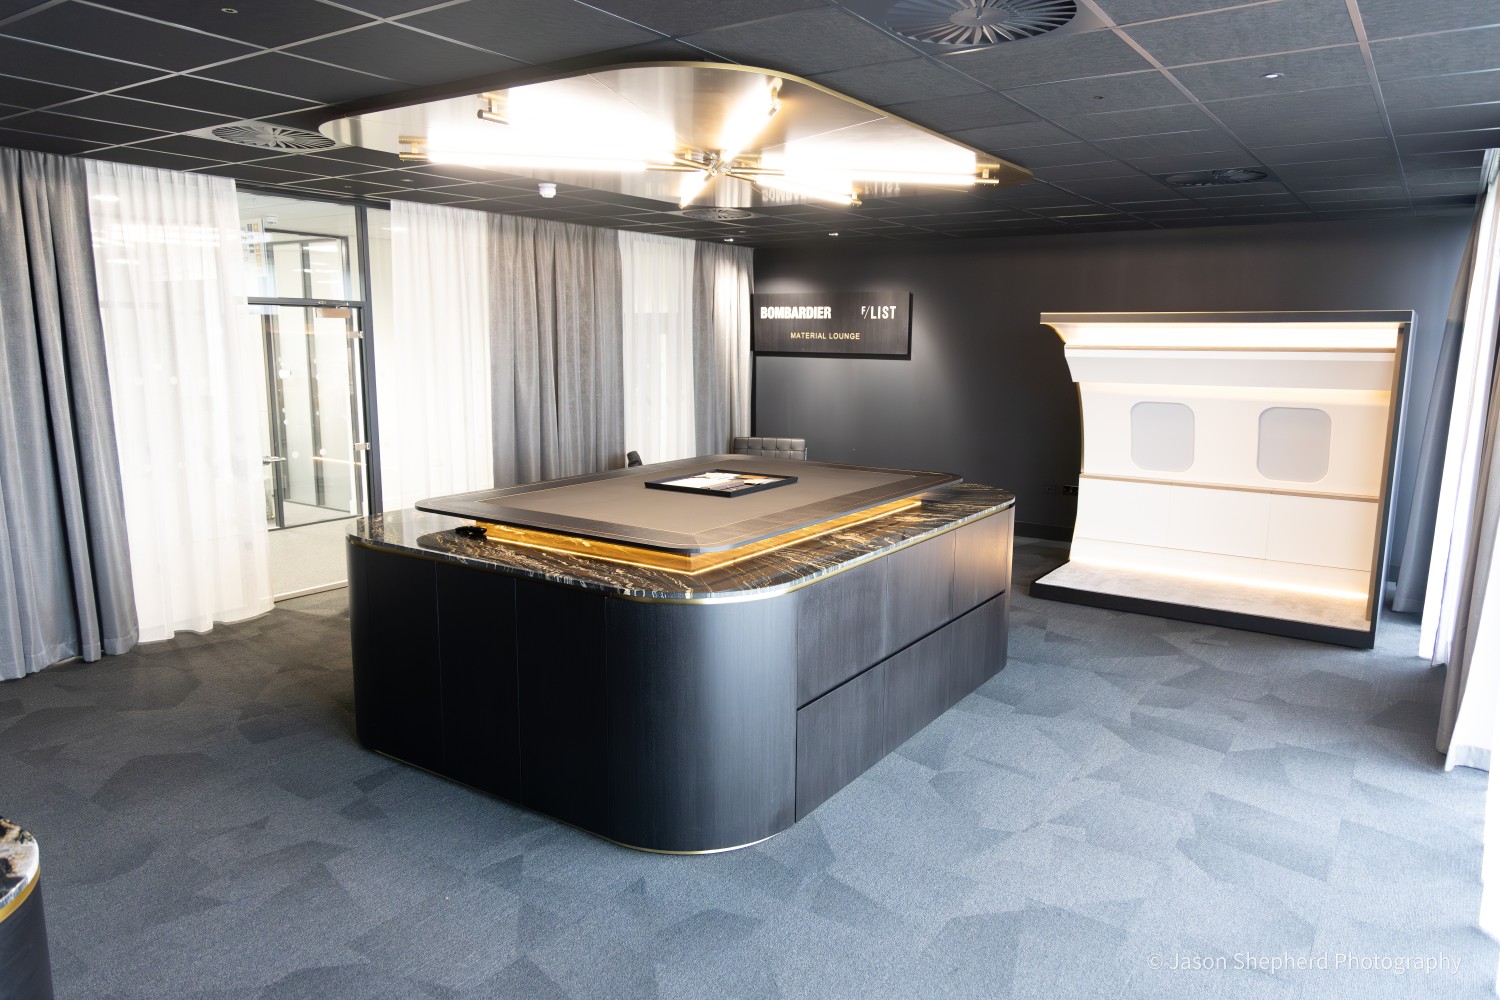 Bombardier adds new Material Lounge at the London Biggin Hill Service Centre